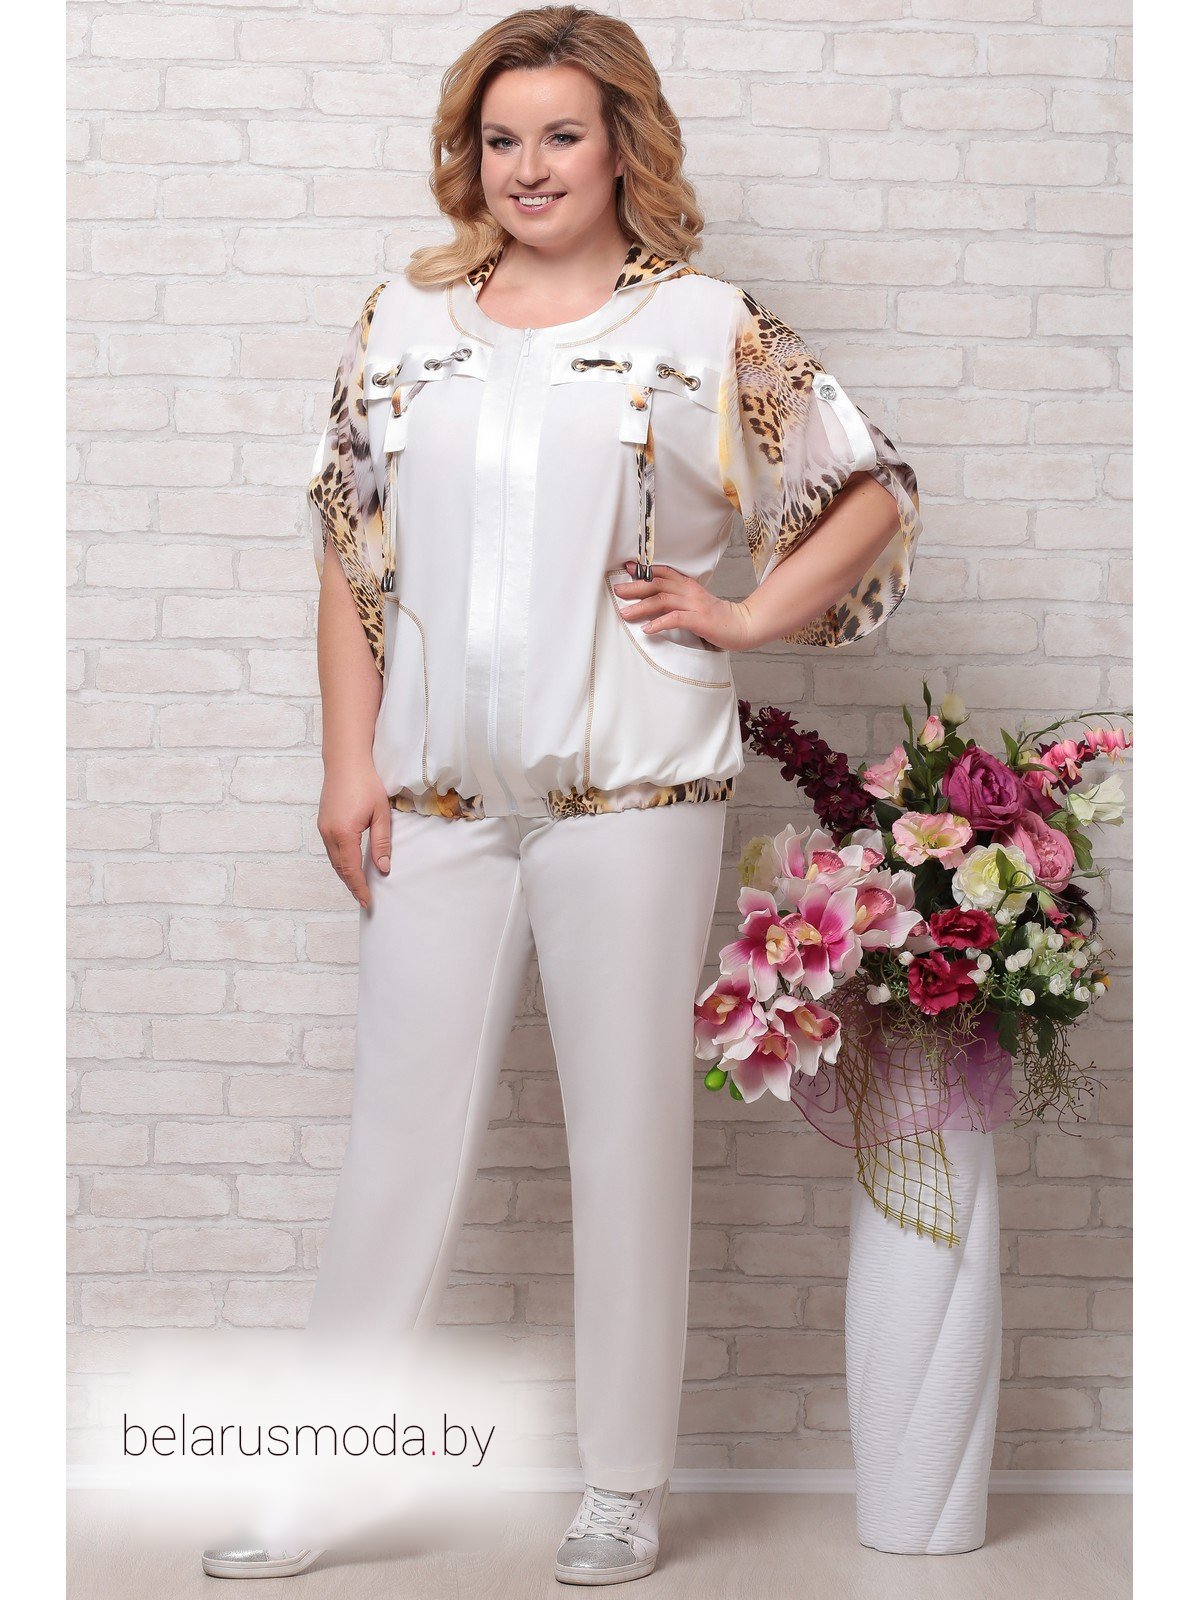 Купить летний костюм женский интернет магазине. Комплект Aira Style. Комплект брючный Aira Style. Белорусские брючные костюмы Aira Style 650. Костюм Aira Style модель 764.